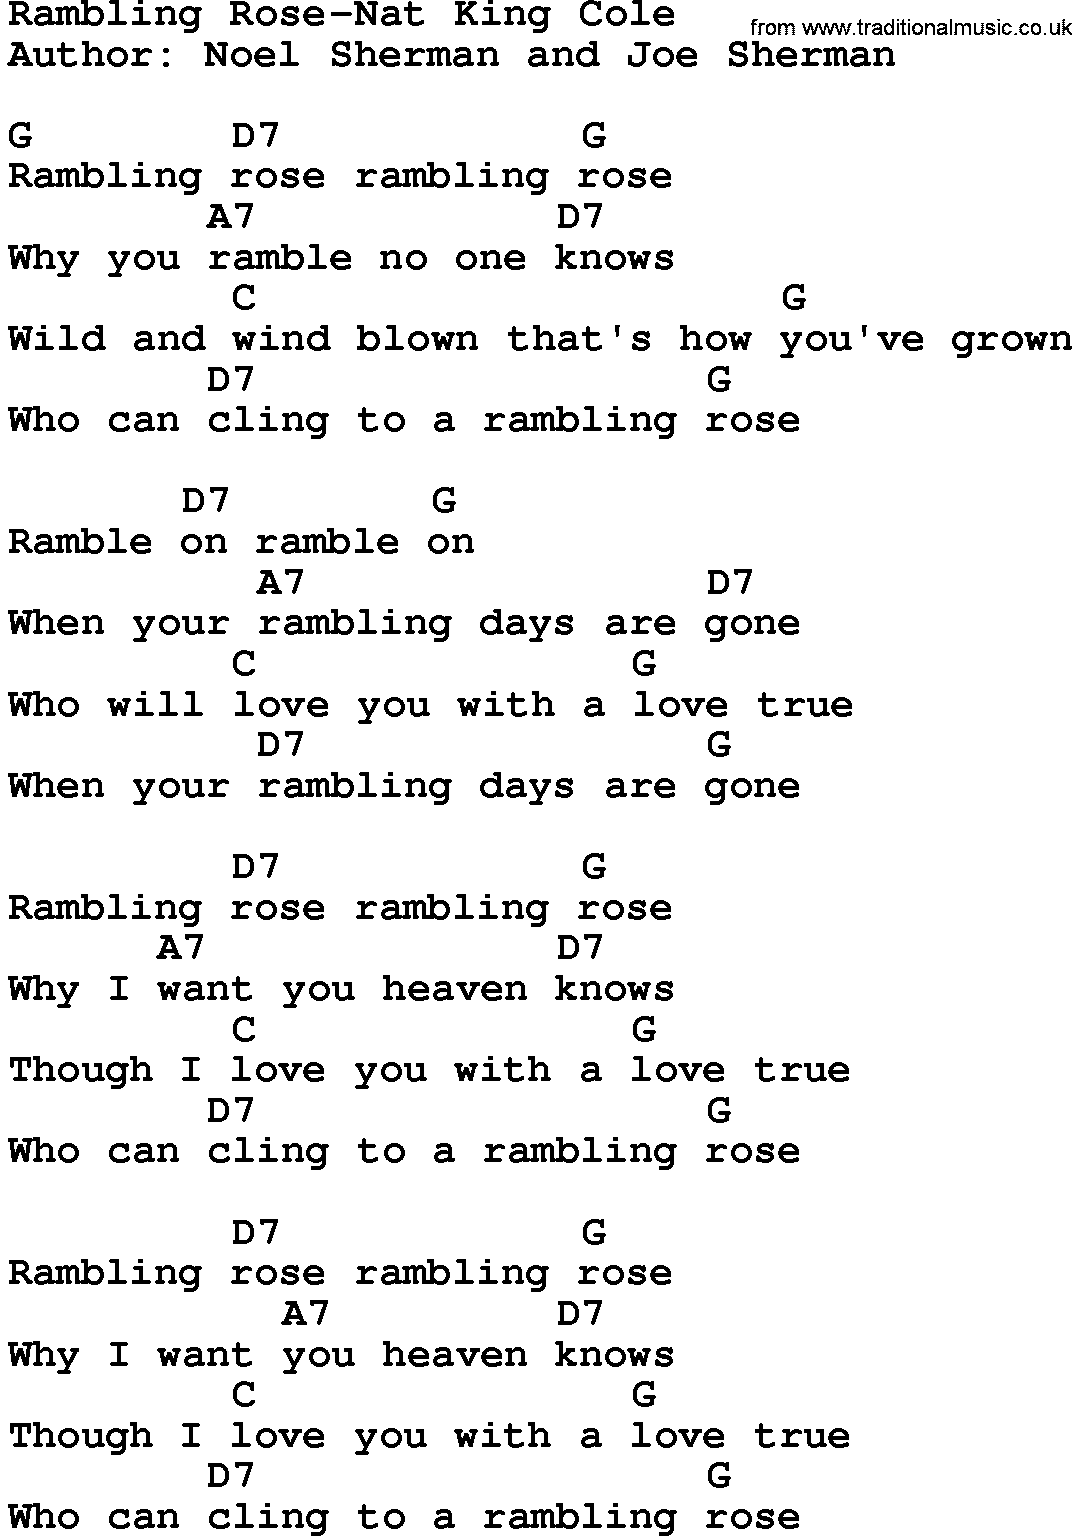 Country music song: Rambling Rose-Nat King Cole lyrics and chords